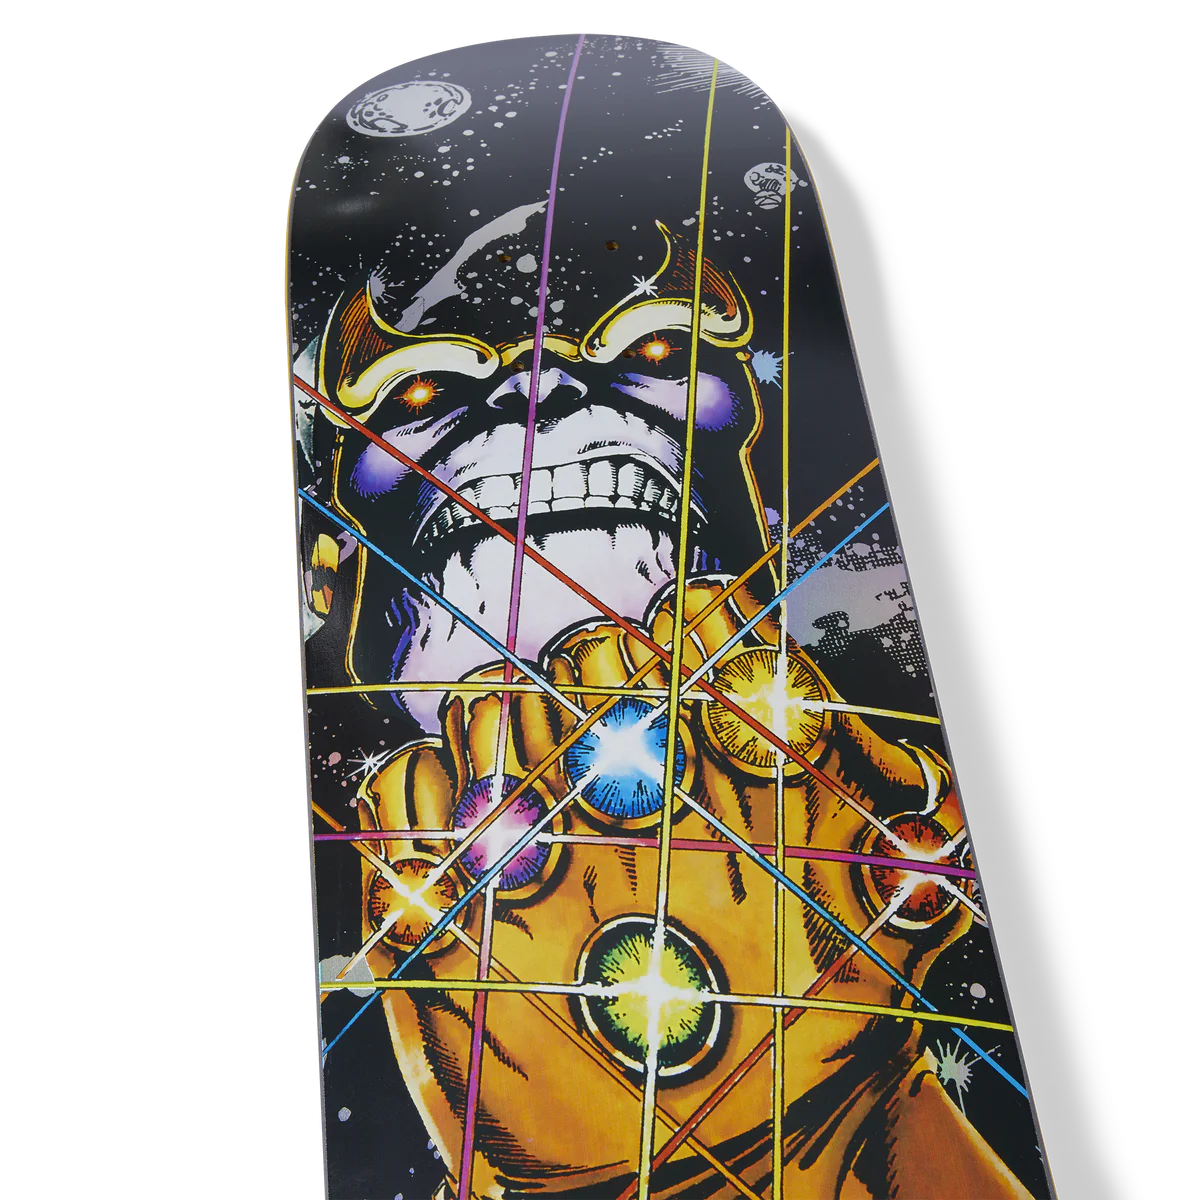 HUF x Avengers Oh Snap Skateboard Deck